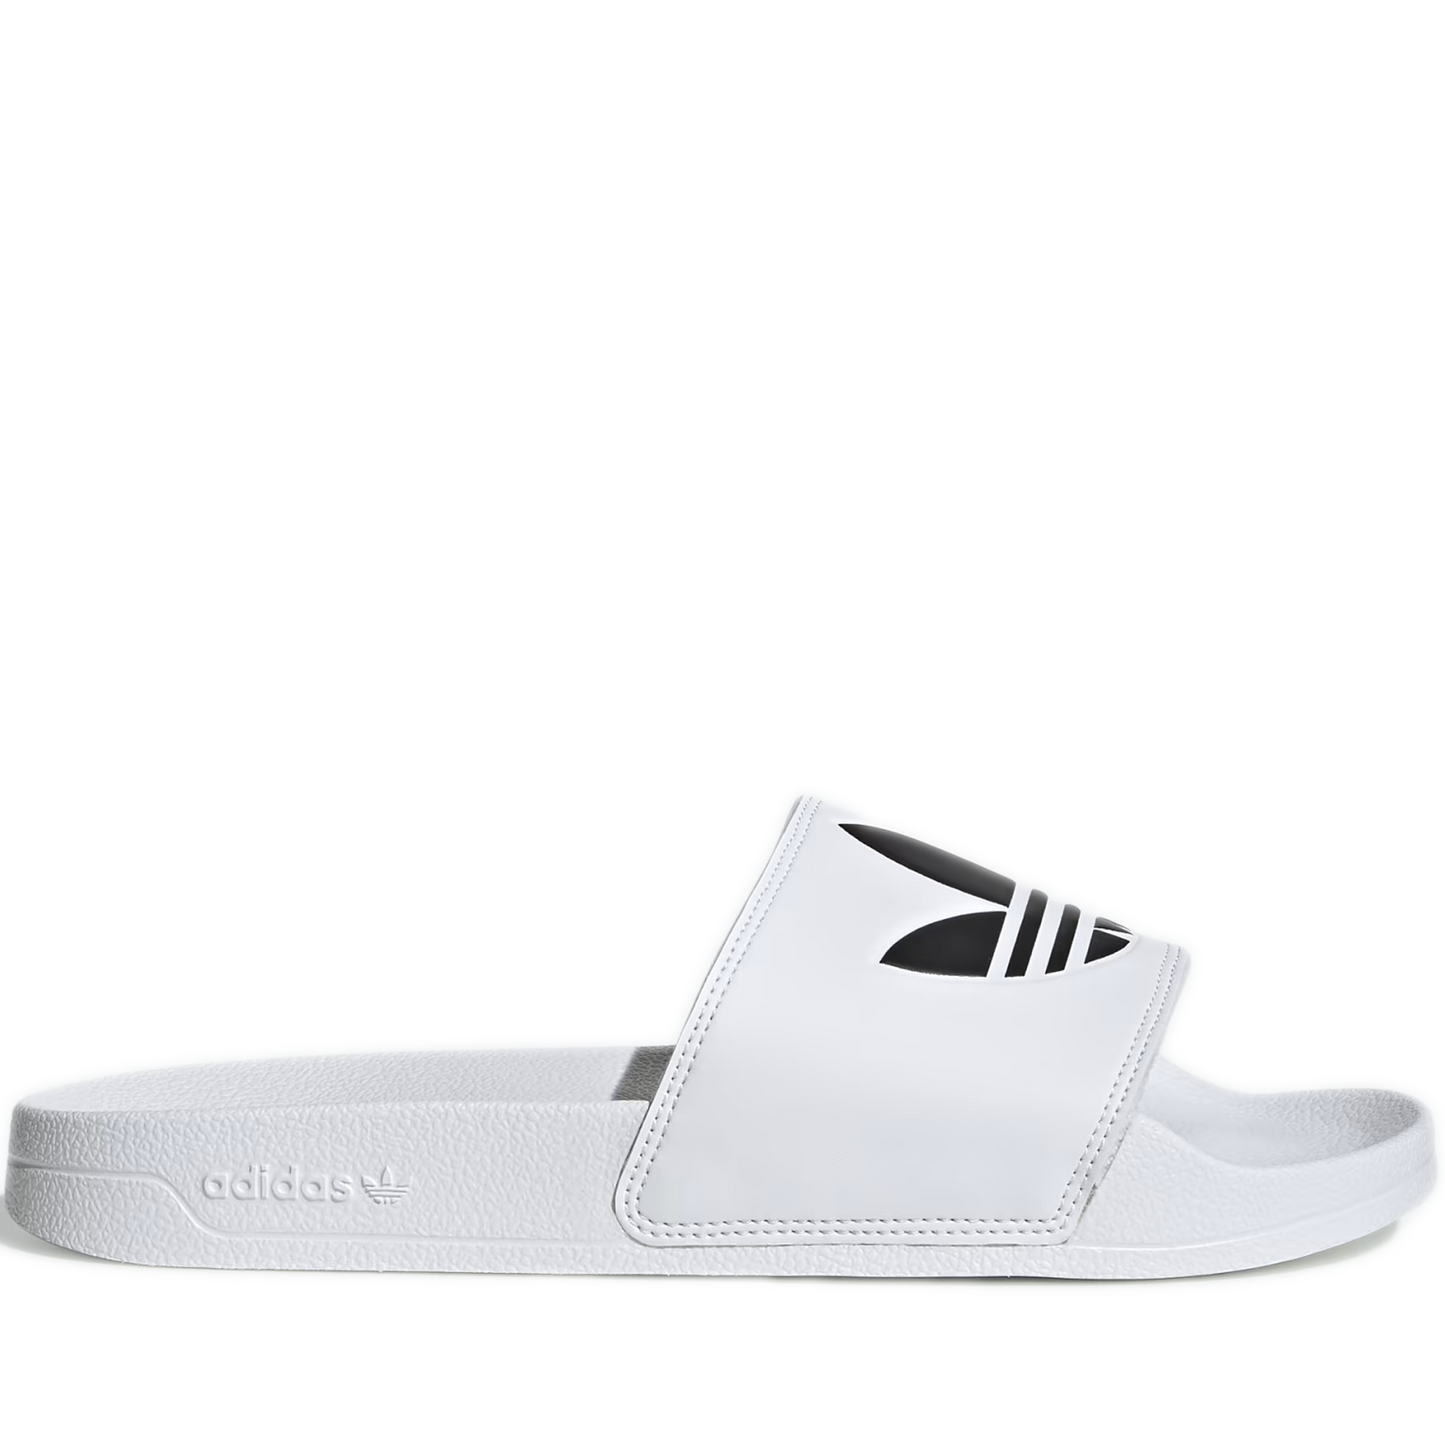 Men's Adidas Adilette Lite Slides - White